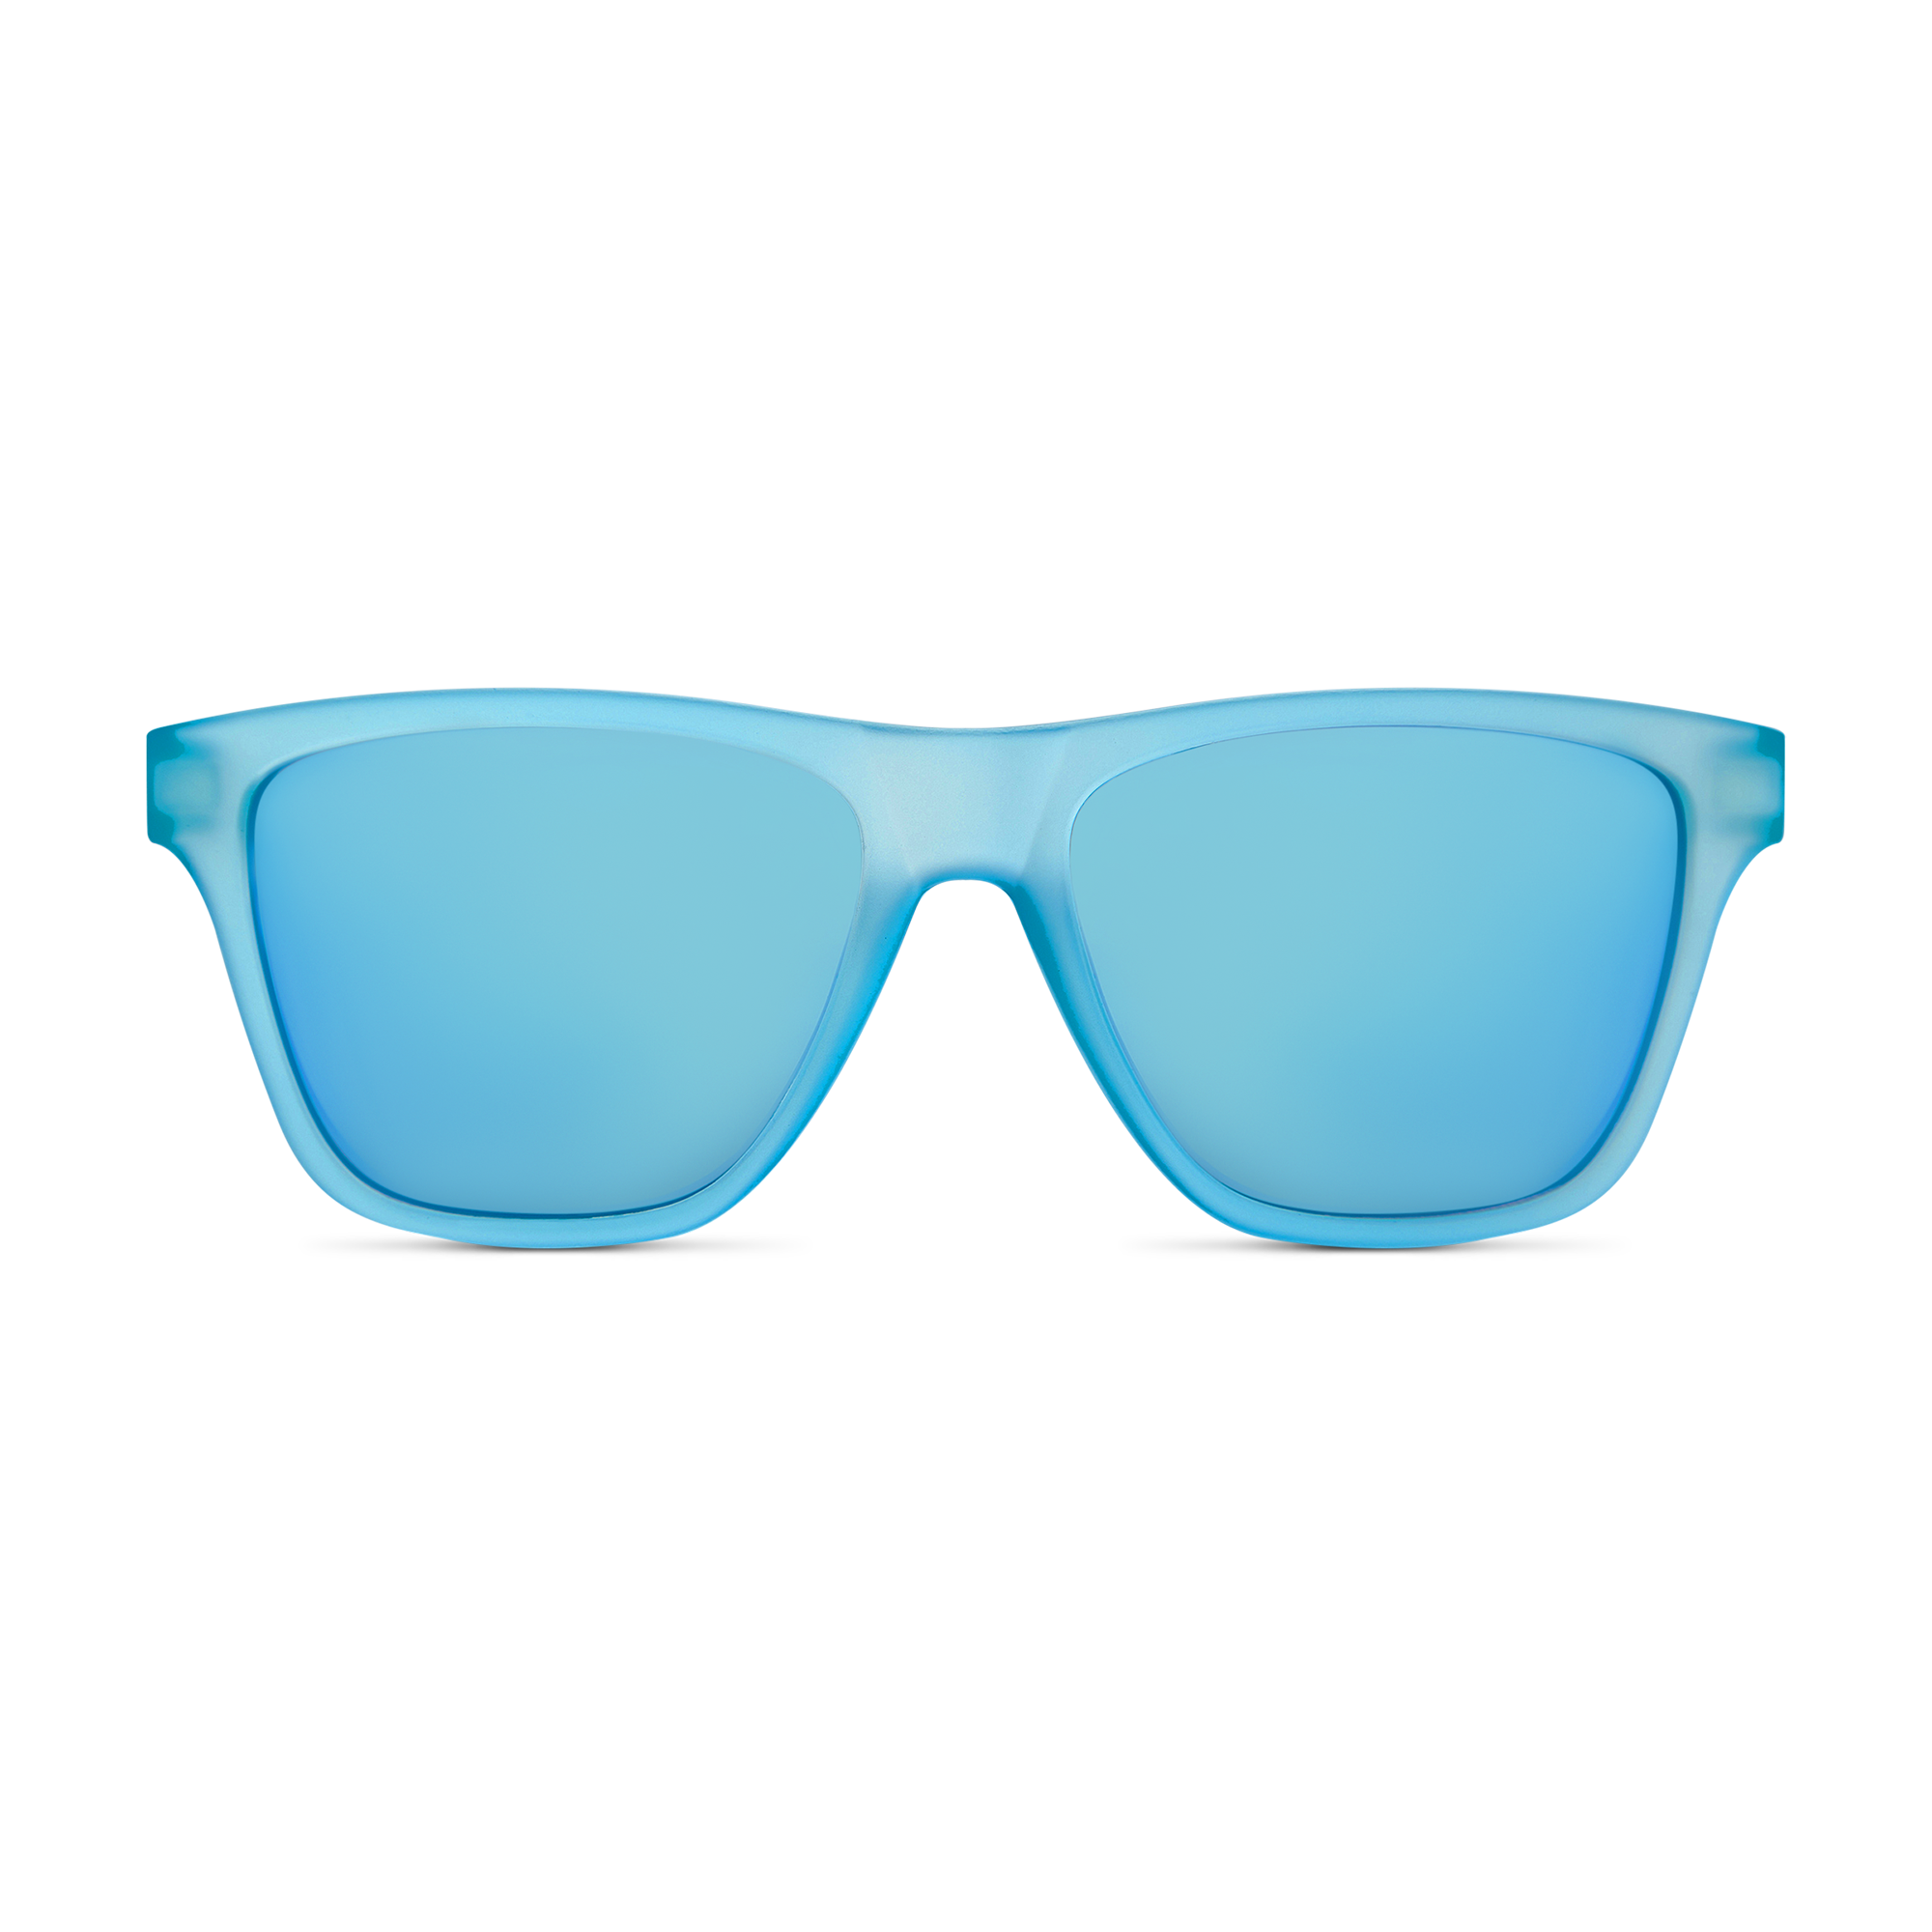 Ocean Blue Sunglasses | Matte Blue Sunglasses | Blue Frame Sunglasses ...